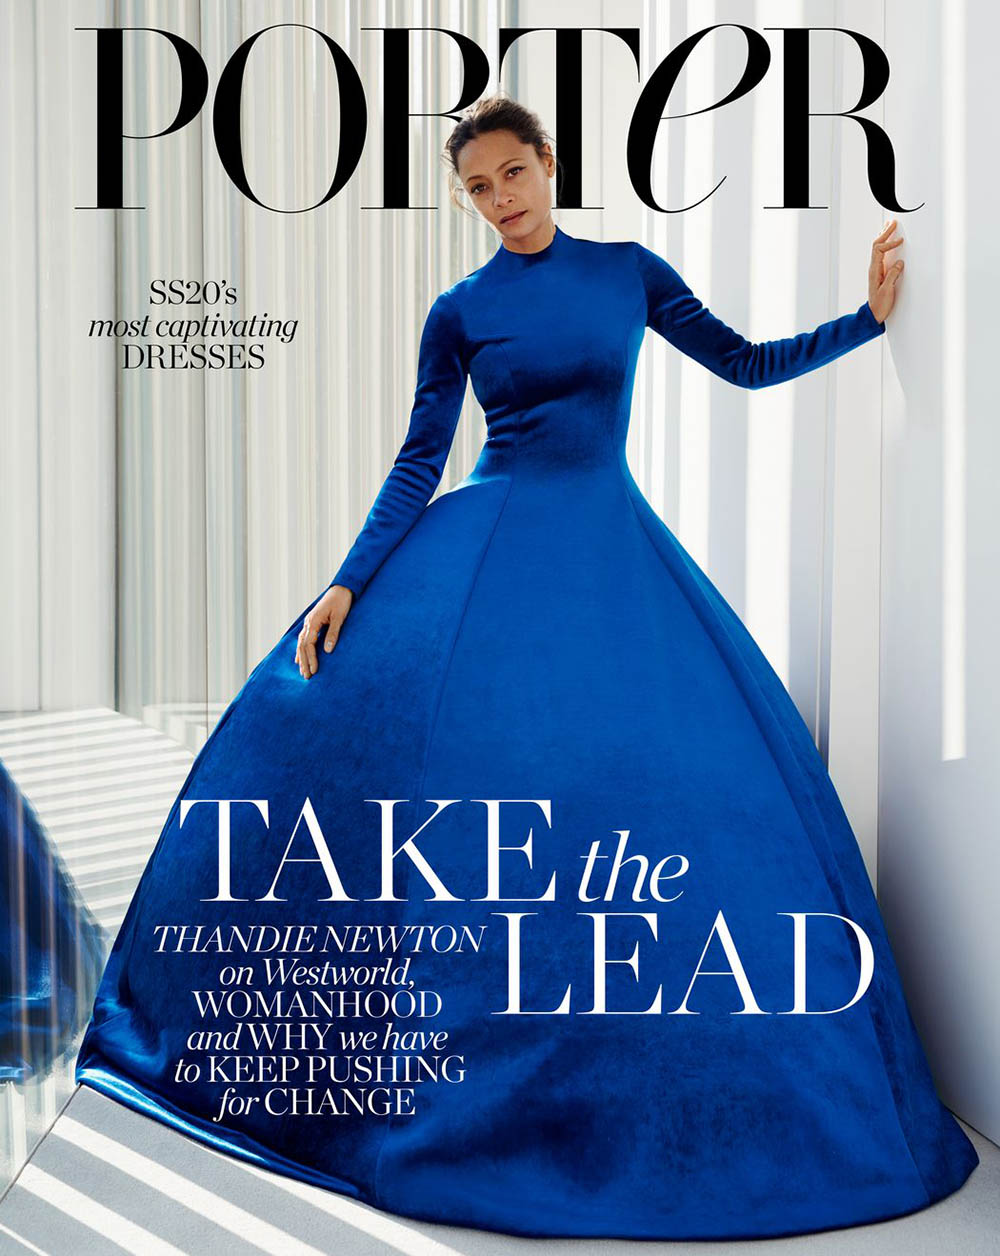 Thandie Newton covers Porter Magazine March 16th, 2020 by Liz Collins